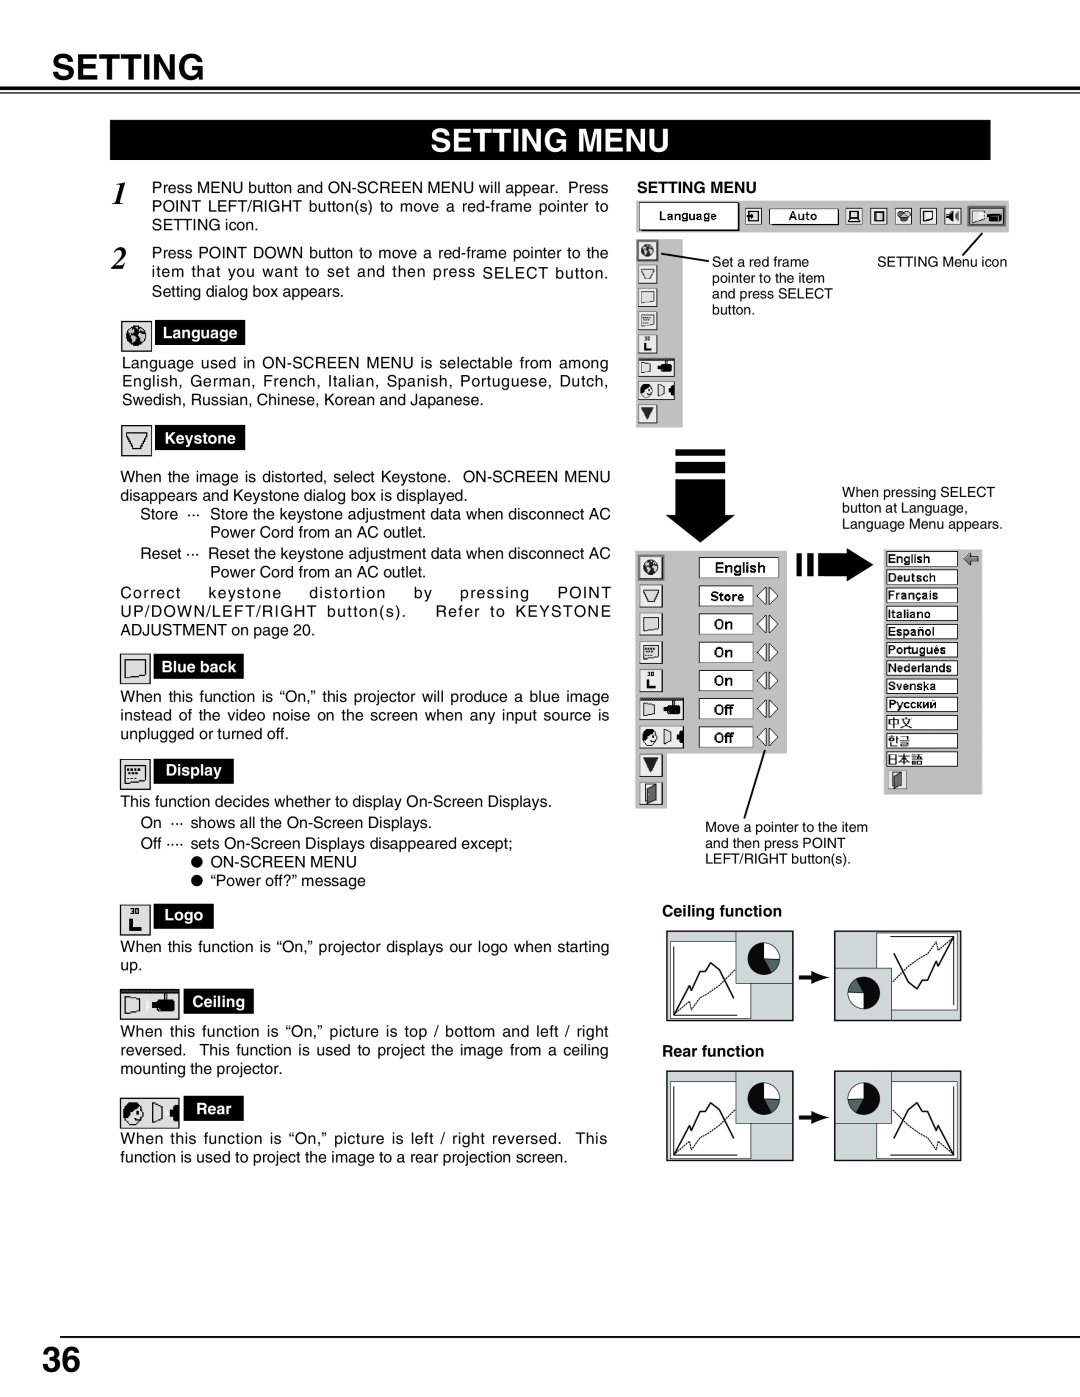 Sanyo PLC-XT10A owner manual Setting Menu, Ceiling function Rear function 